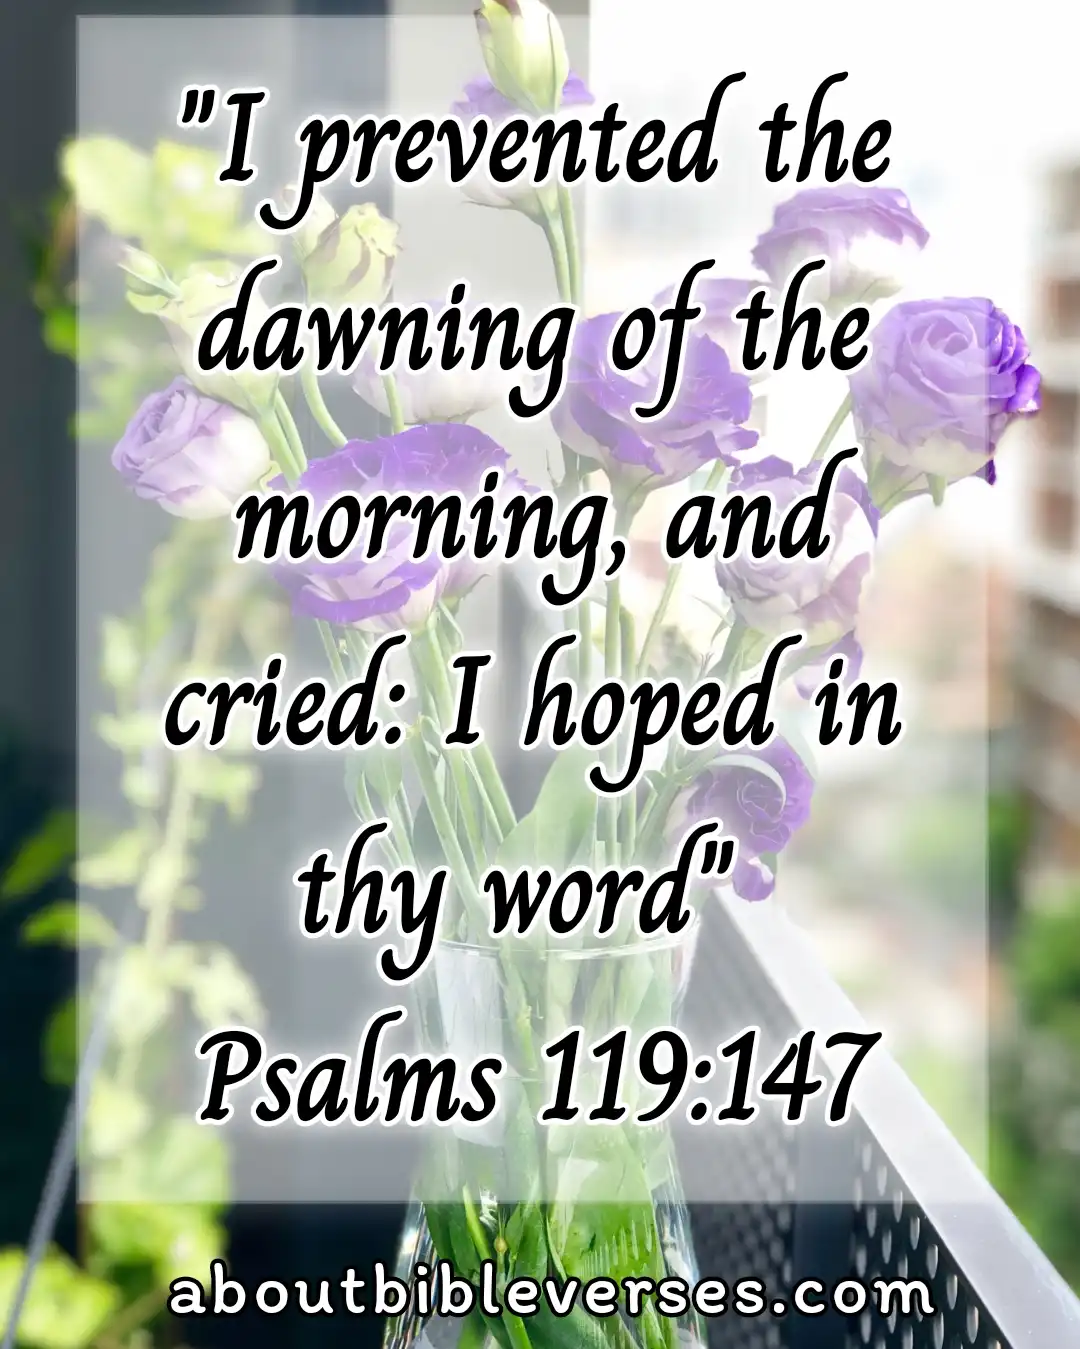 Good morning bible verses (Psalm 119:147)